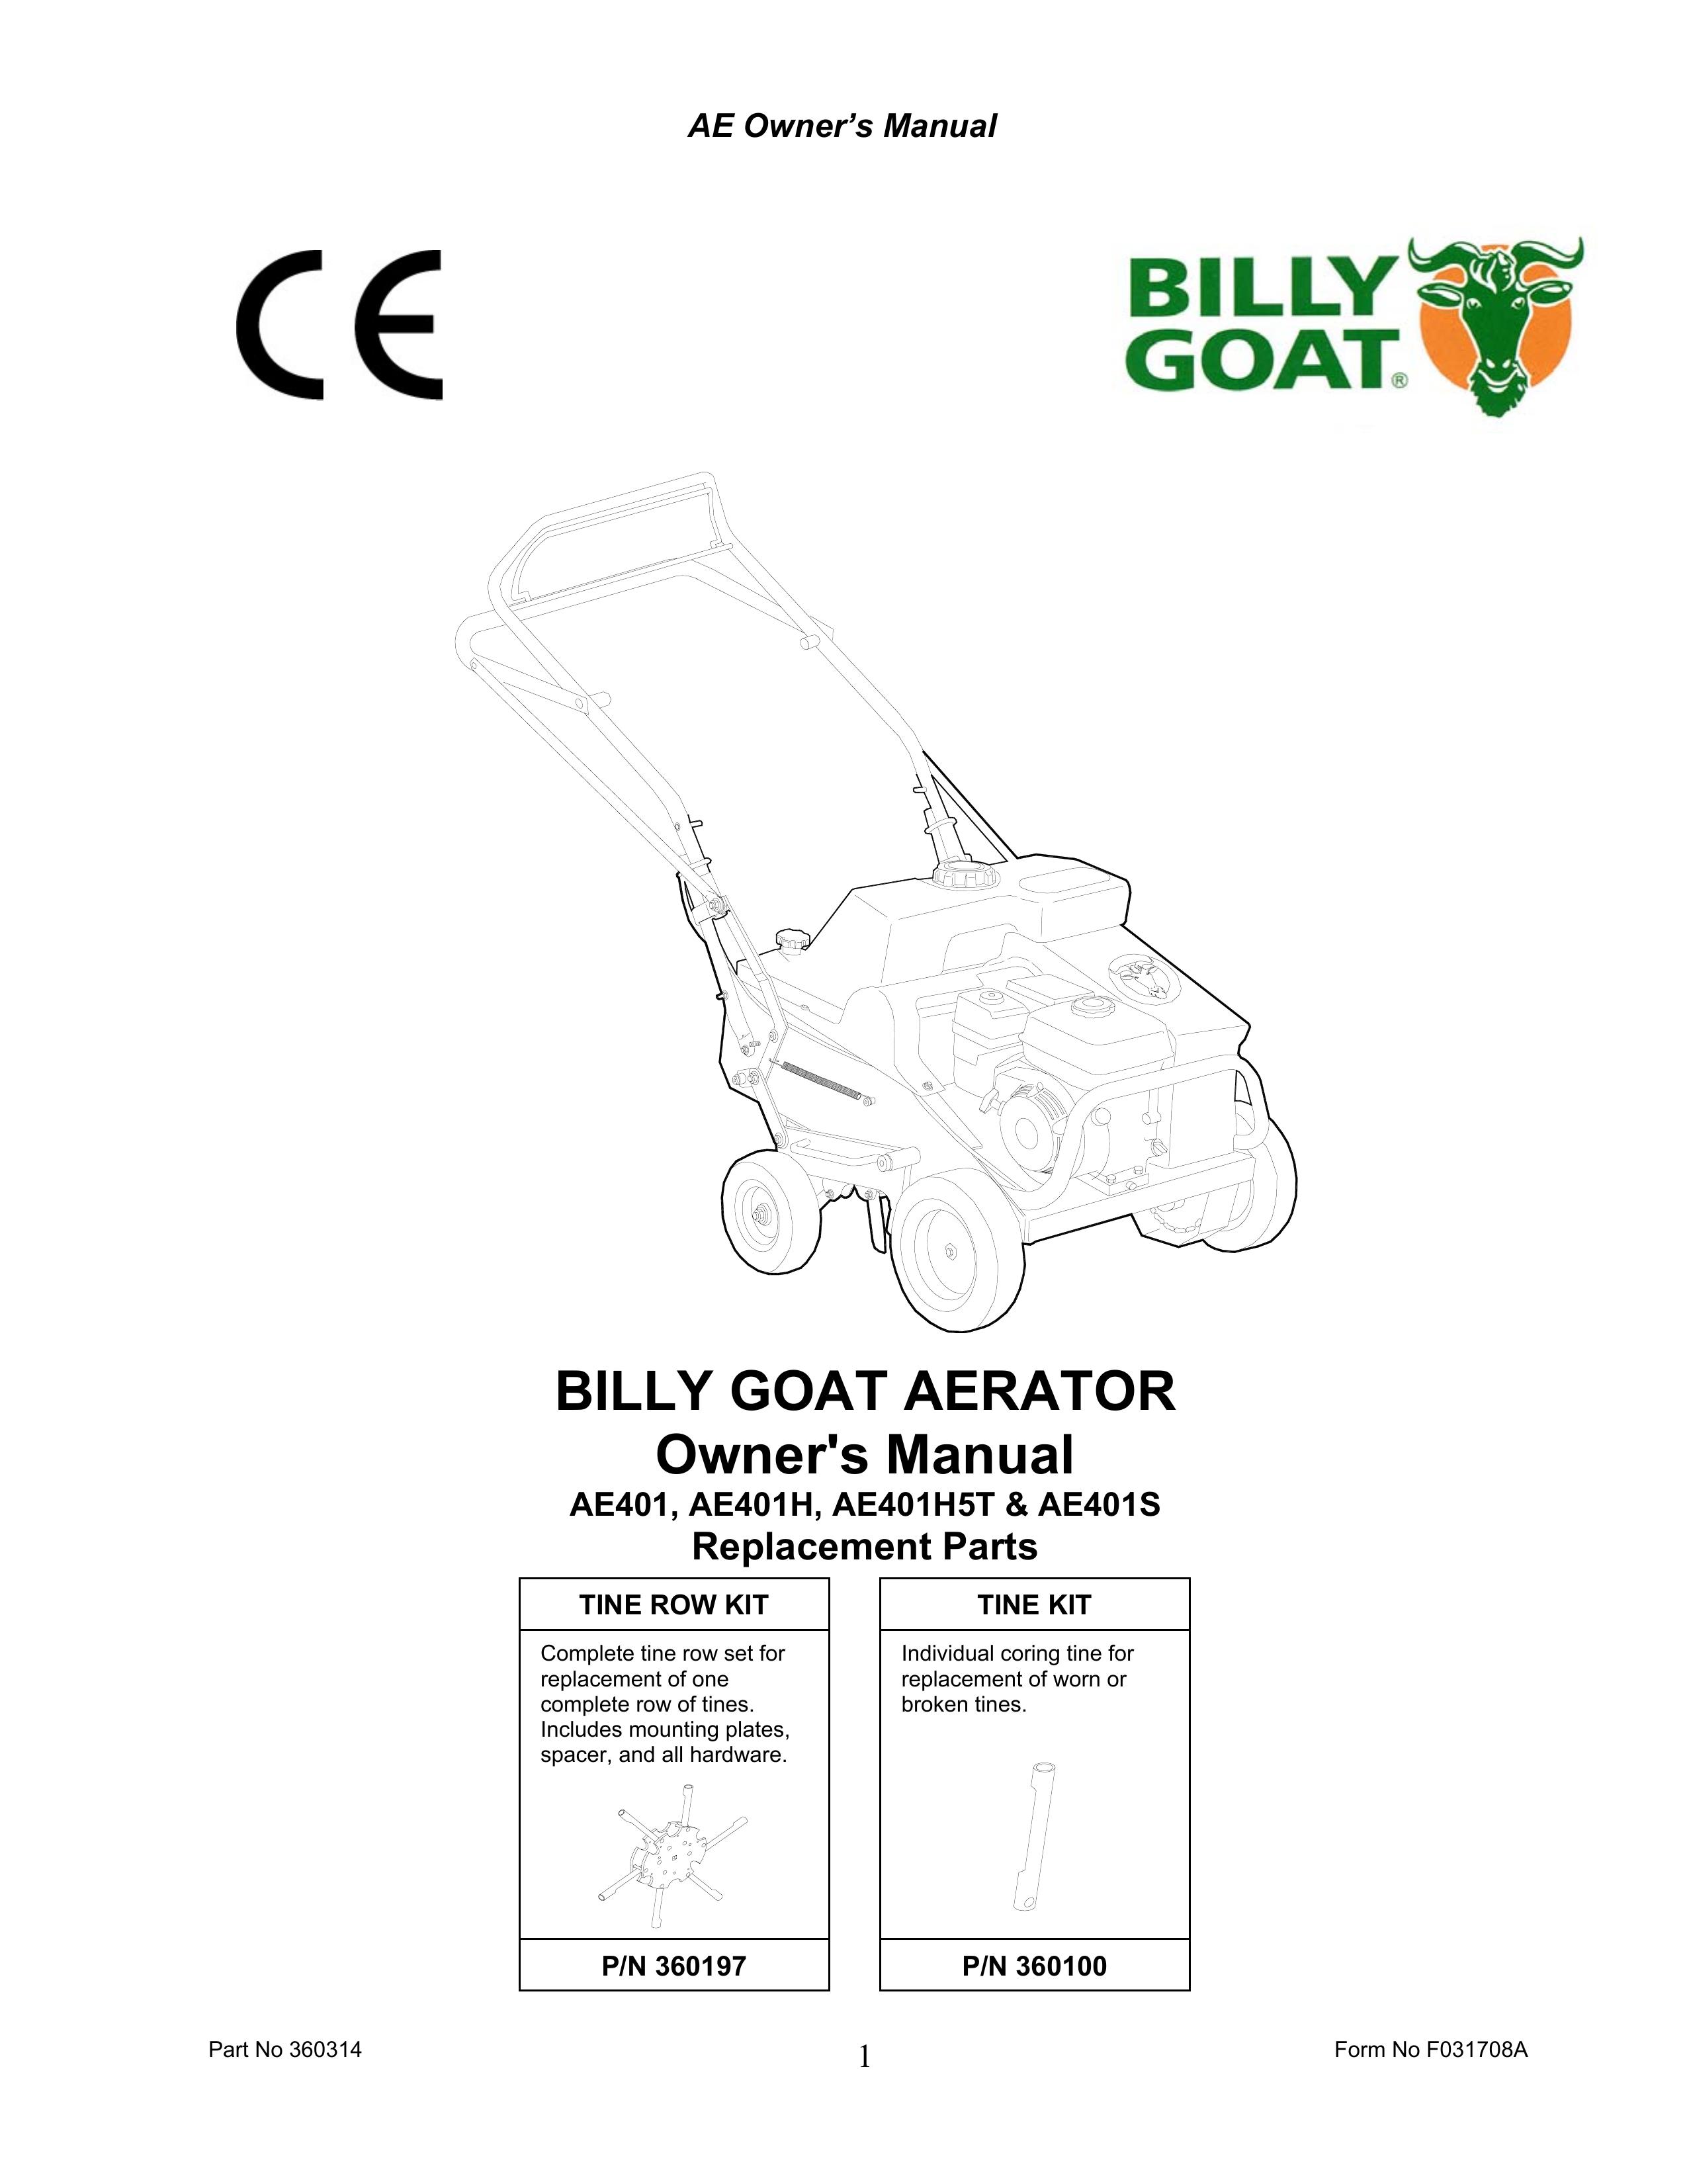 Billy Goat AE401 Lawn Aerator User Manual